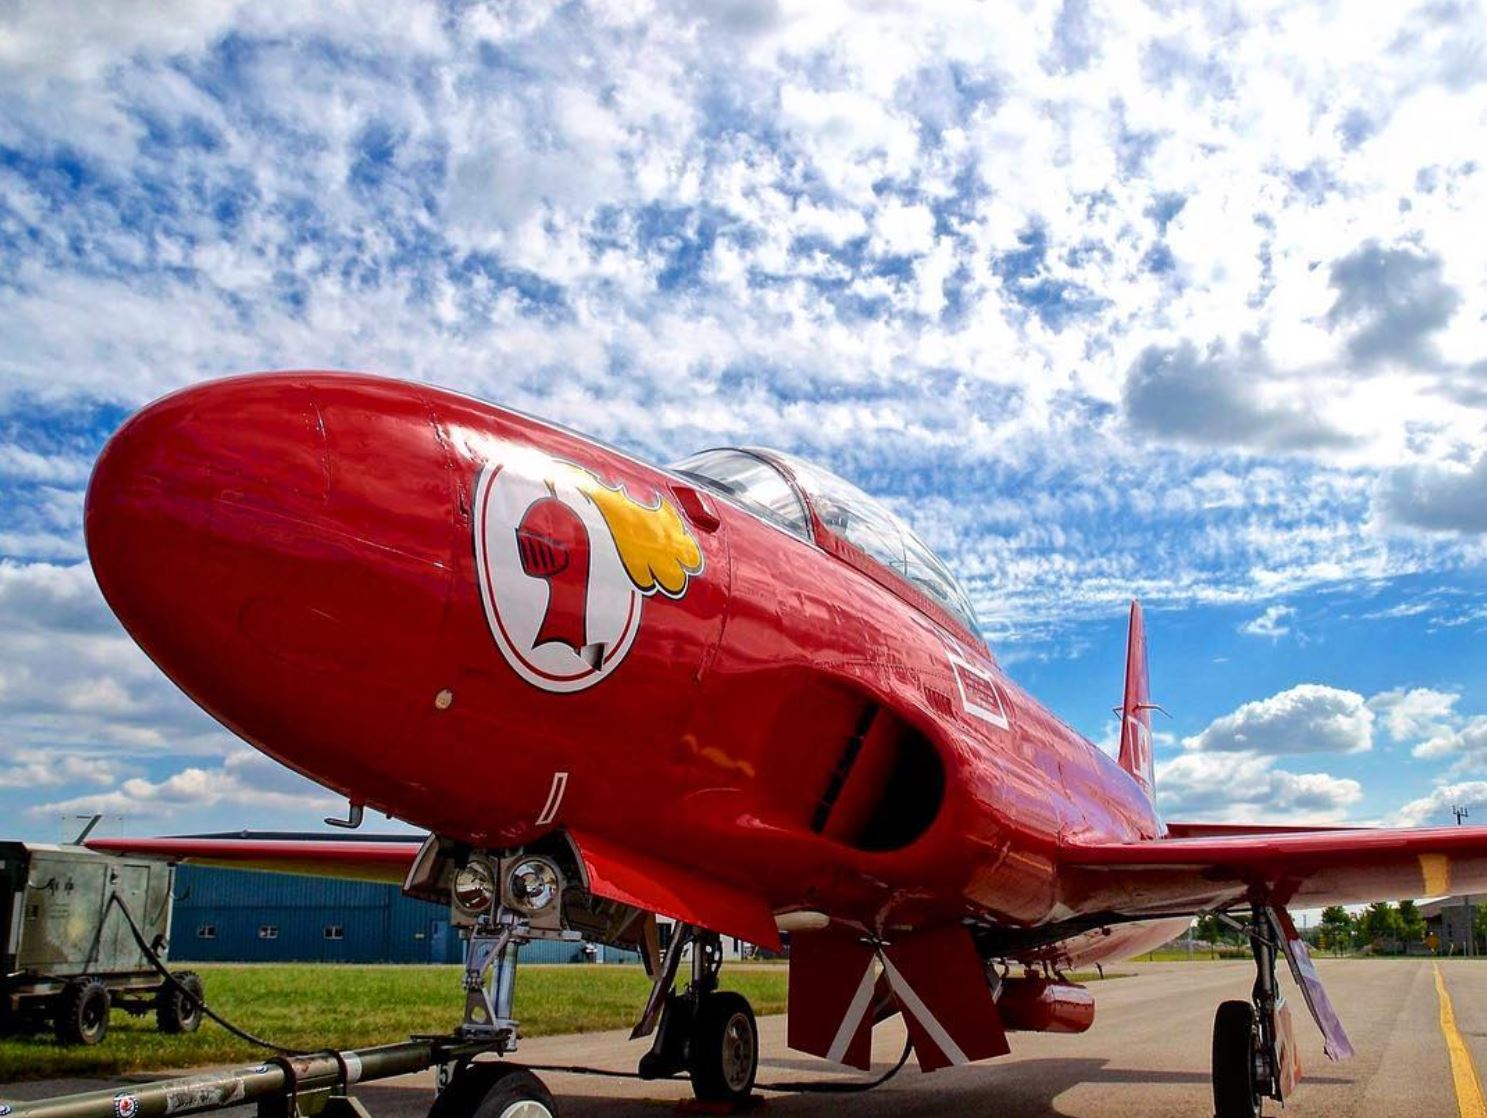 Canadair CT-133 Silverstar "Red Knight" C-FUPP